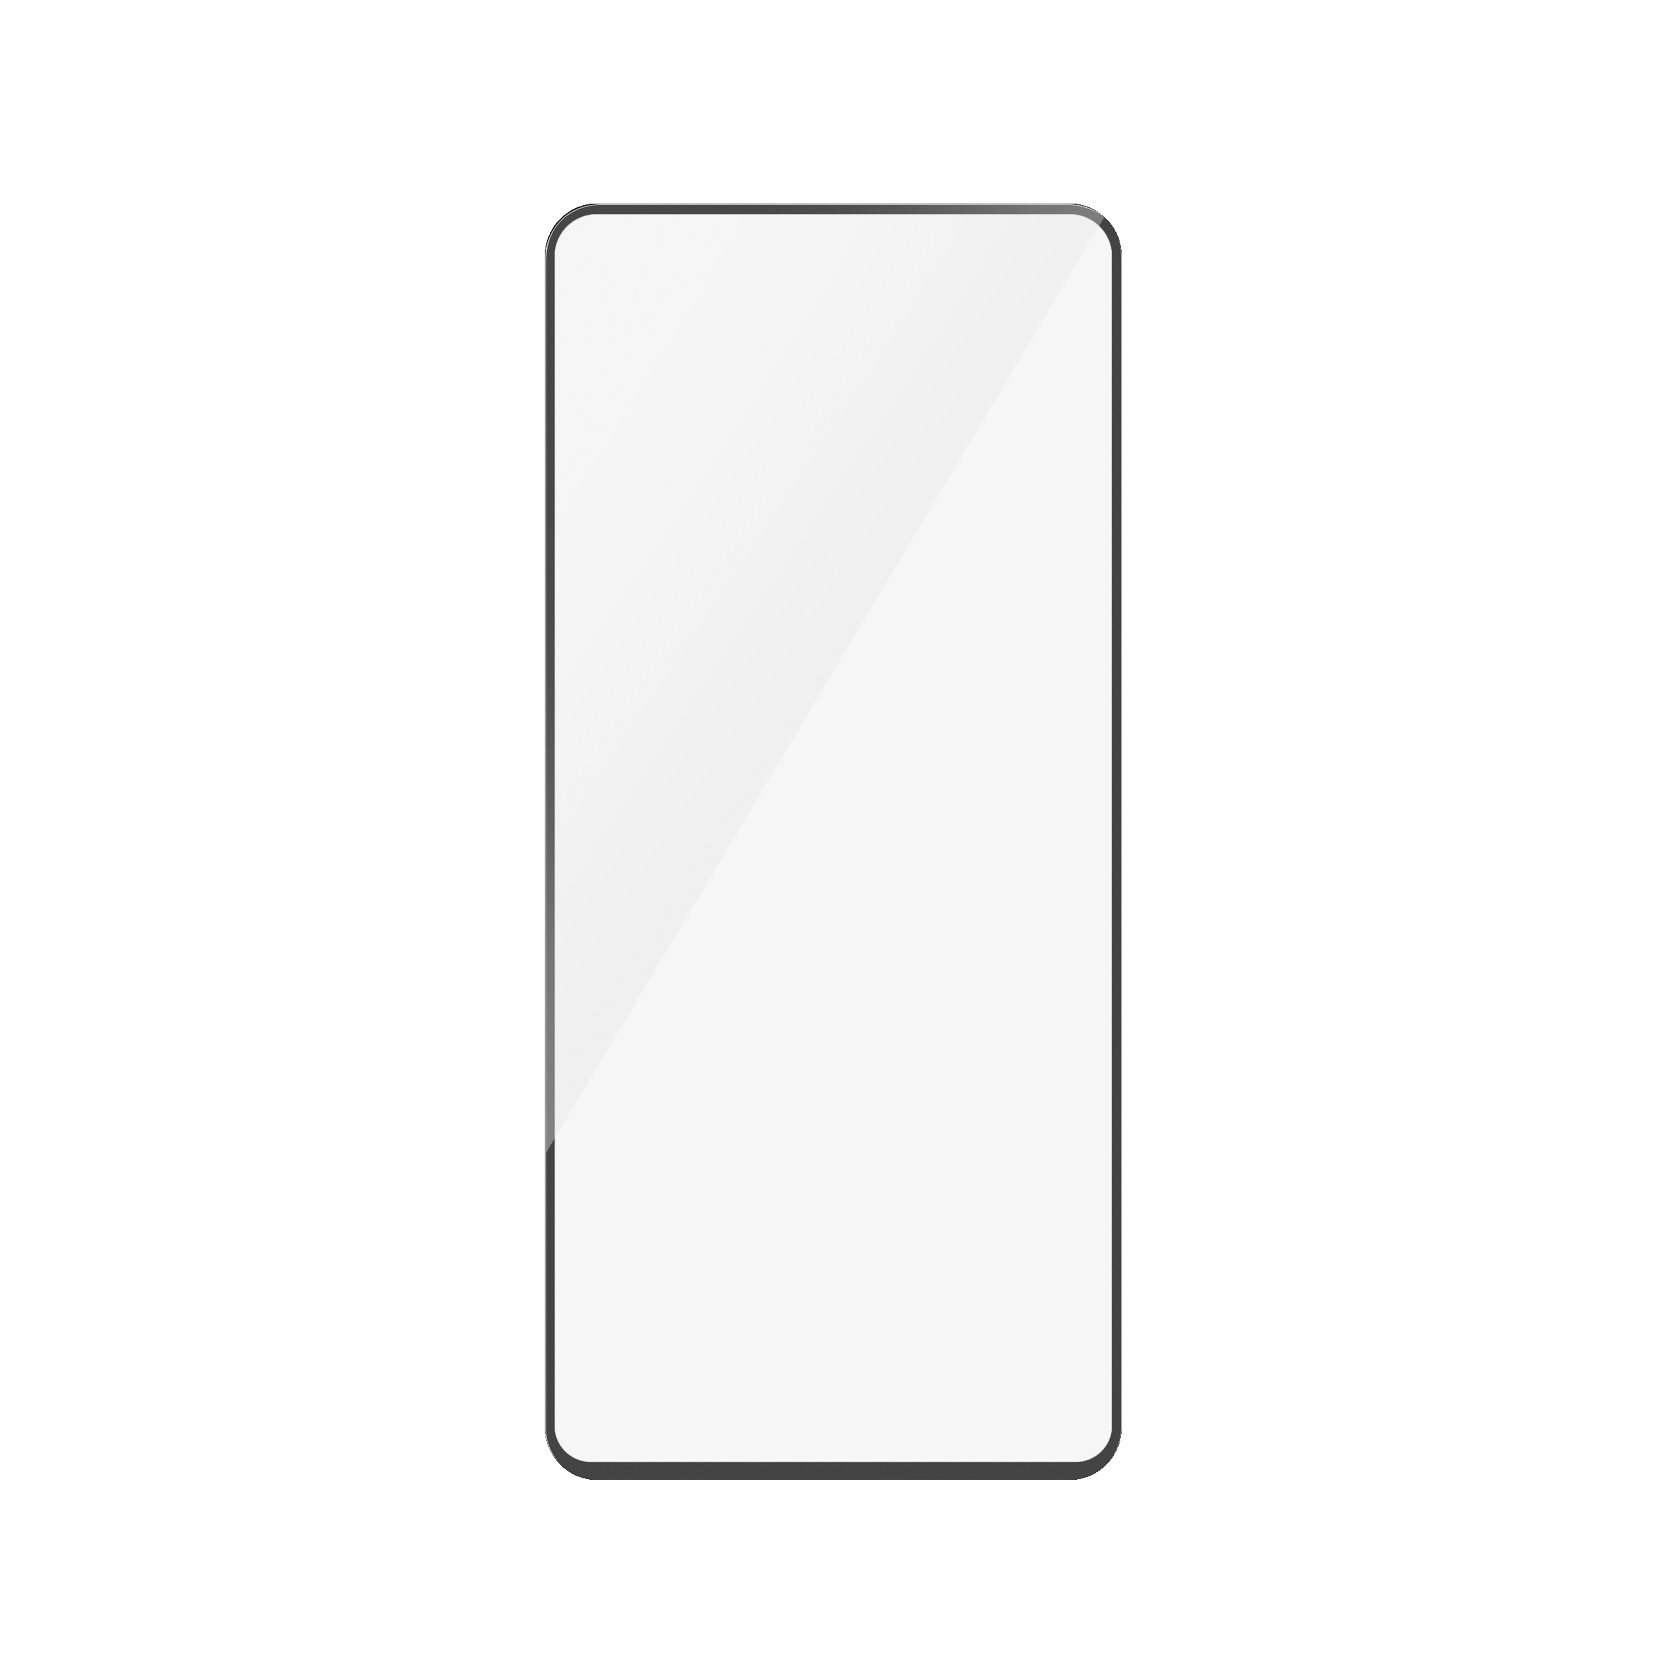 PanzerGlass Displayschutzglas »Ultra Wide Fit Screen Protector«, für Xiaomi 13T-Xiaomi 13T Pro, Displayschutzfolie, Displayschutz, Bildschirmschutz stoßfest kratzfest